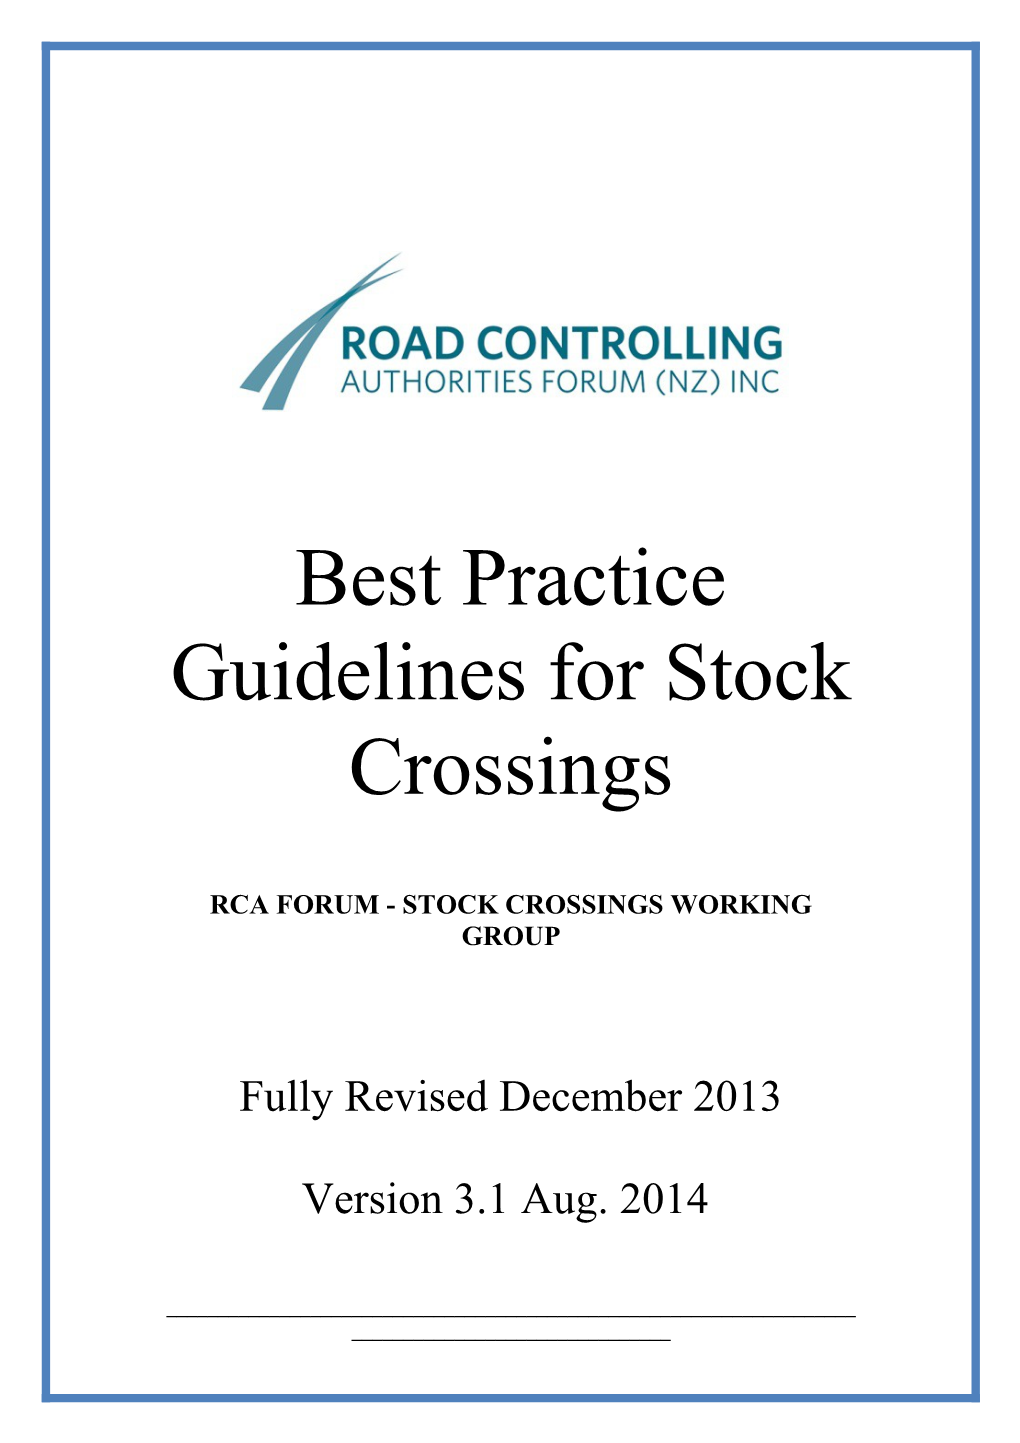 Rca Forum - Stock Crossings Working Group